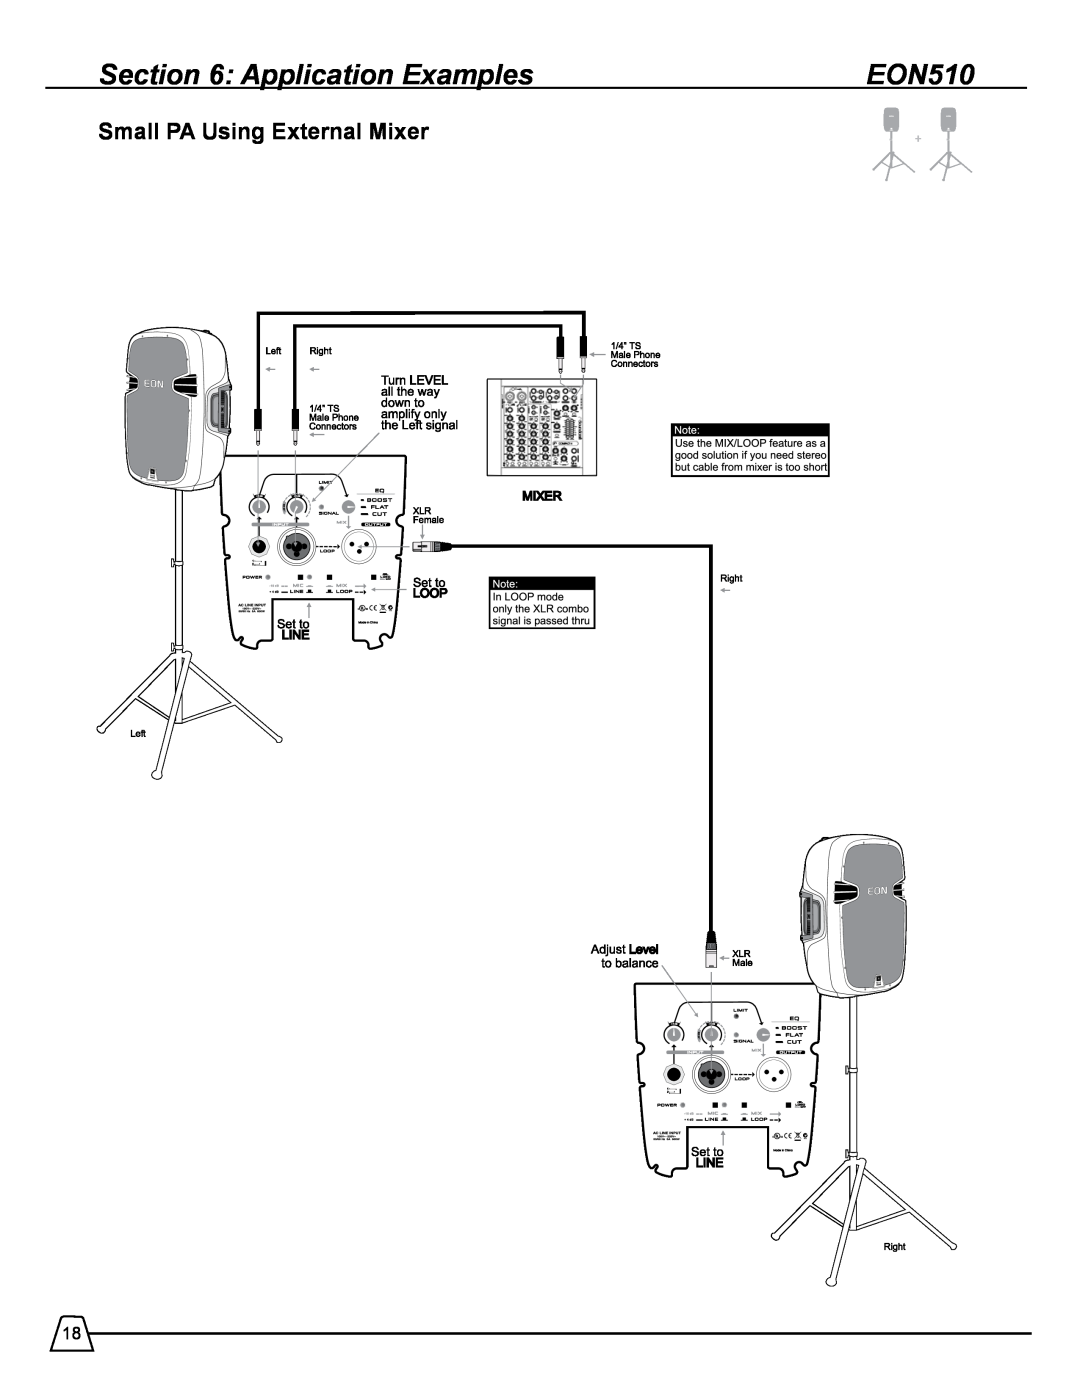 Harman 518S manual EON510, Small PA Using External Mixer, Application Examples 